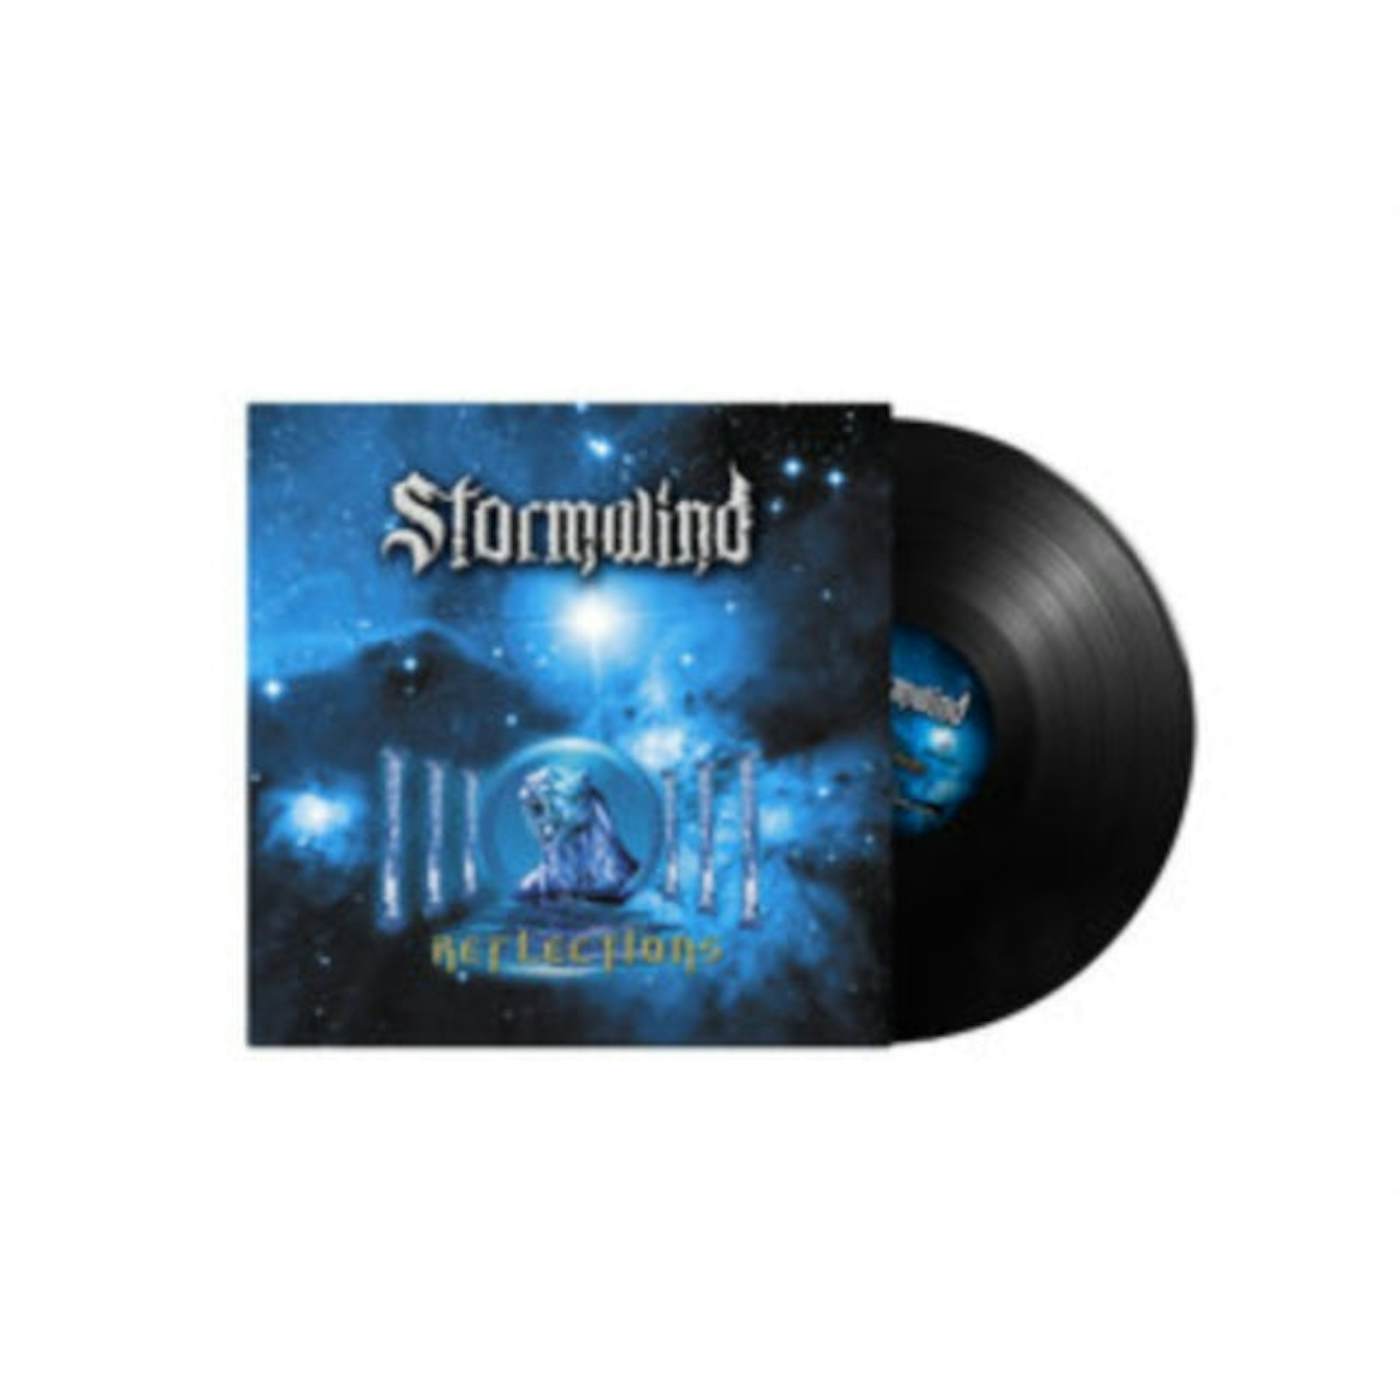 Stormwind LP - Legacy Live (Vinyl)